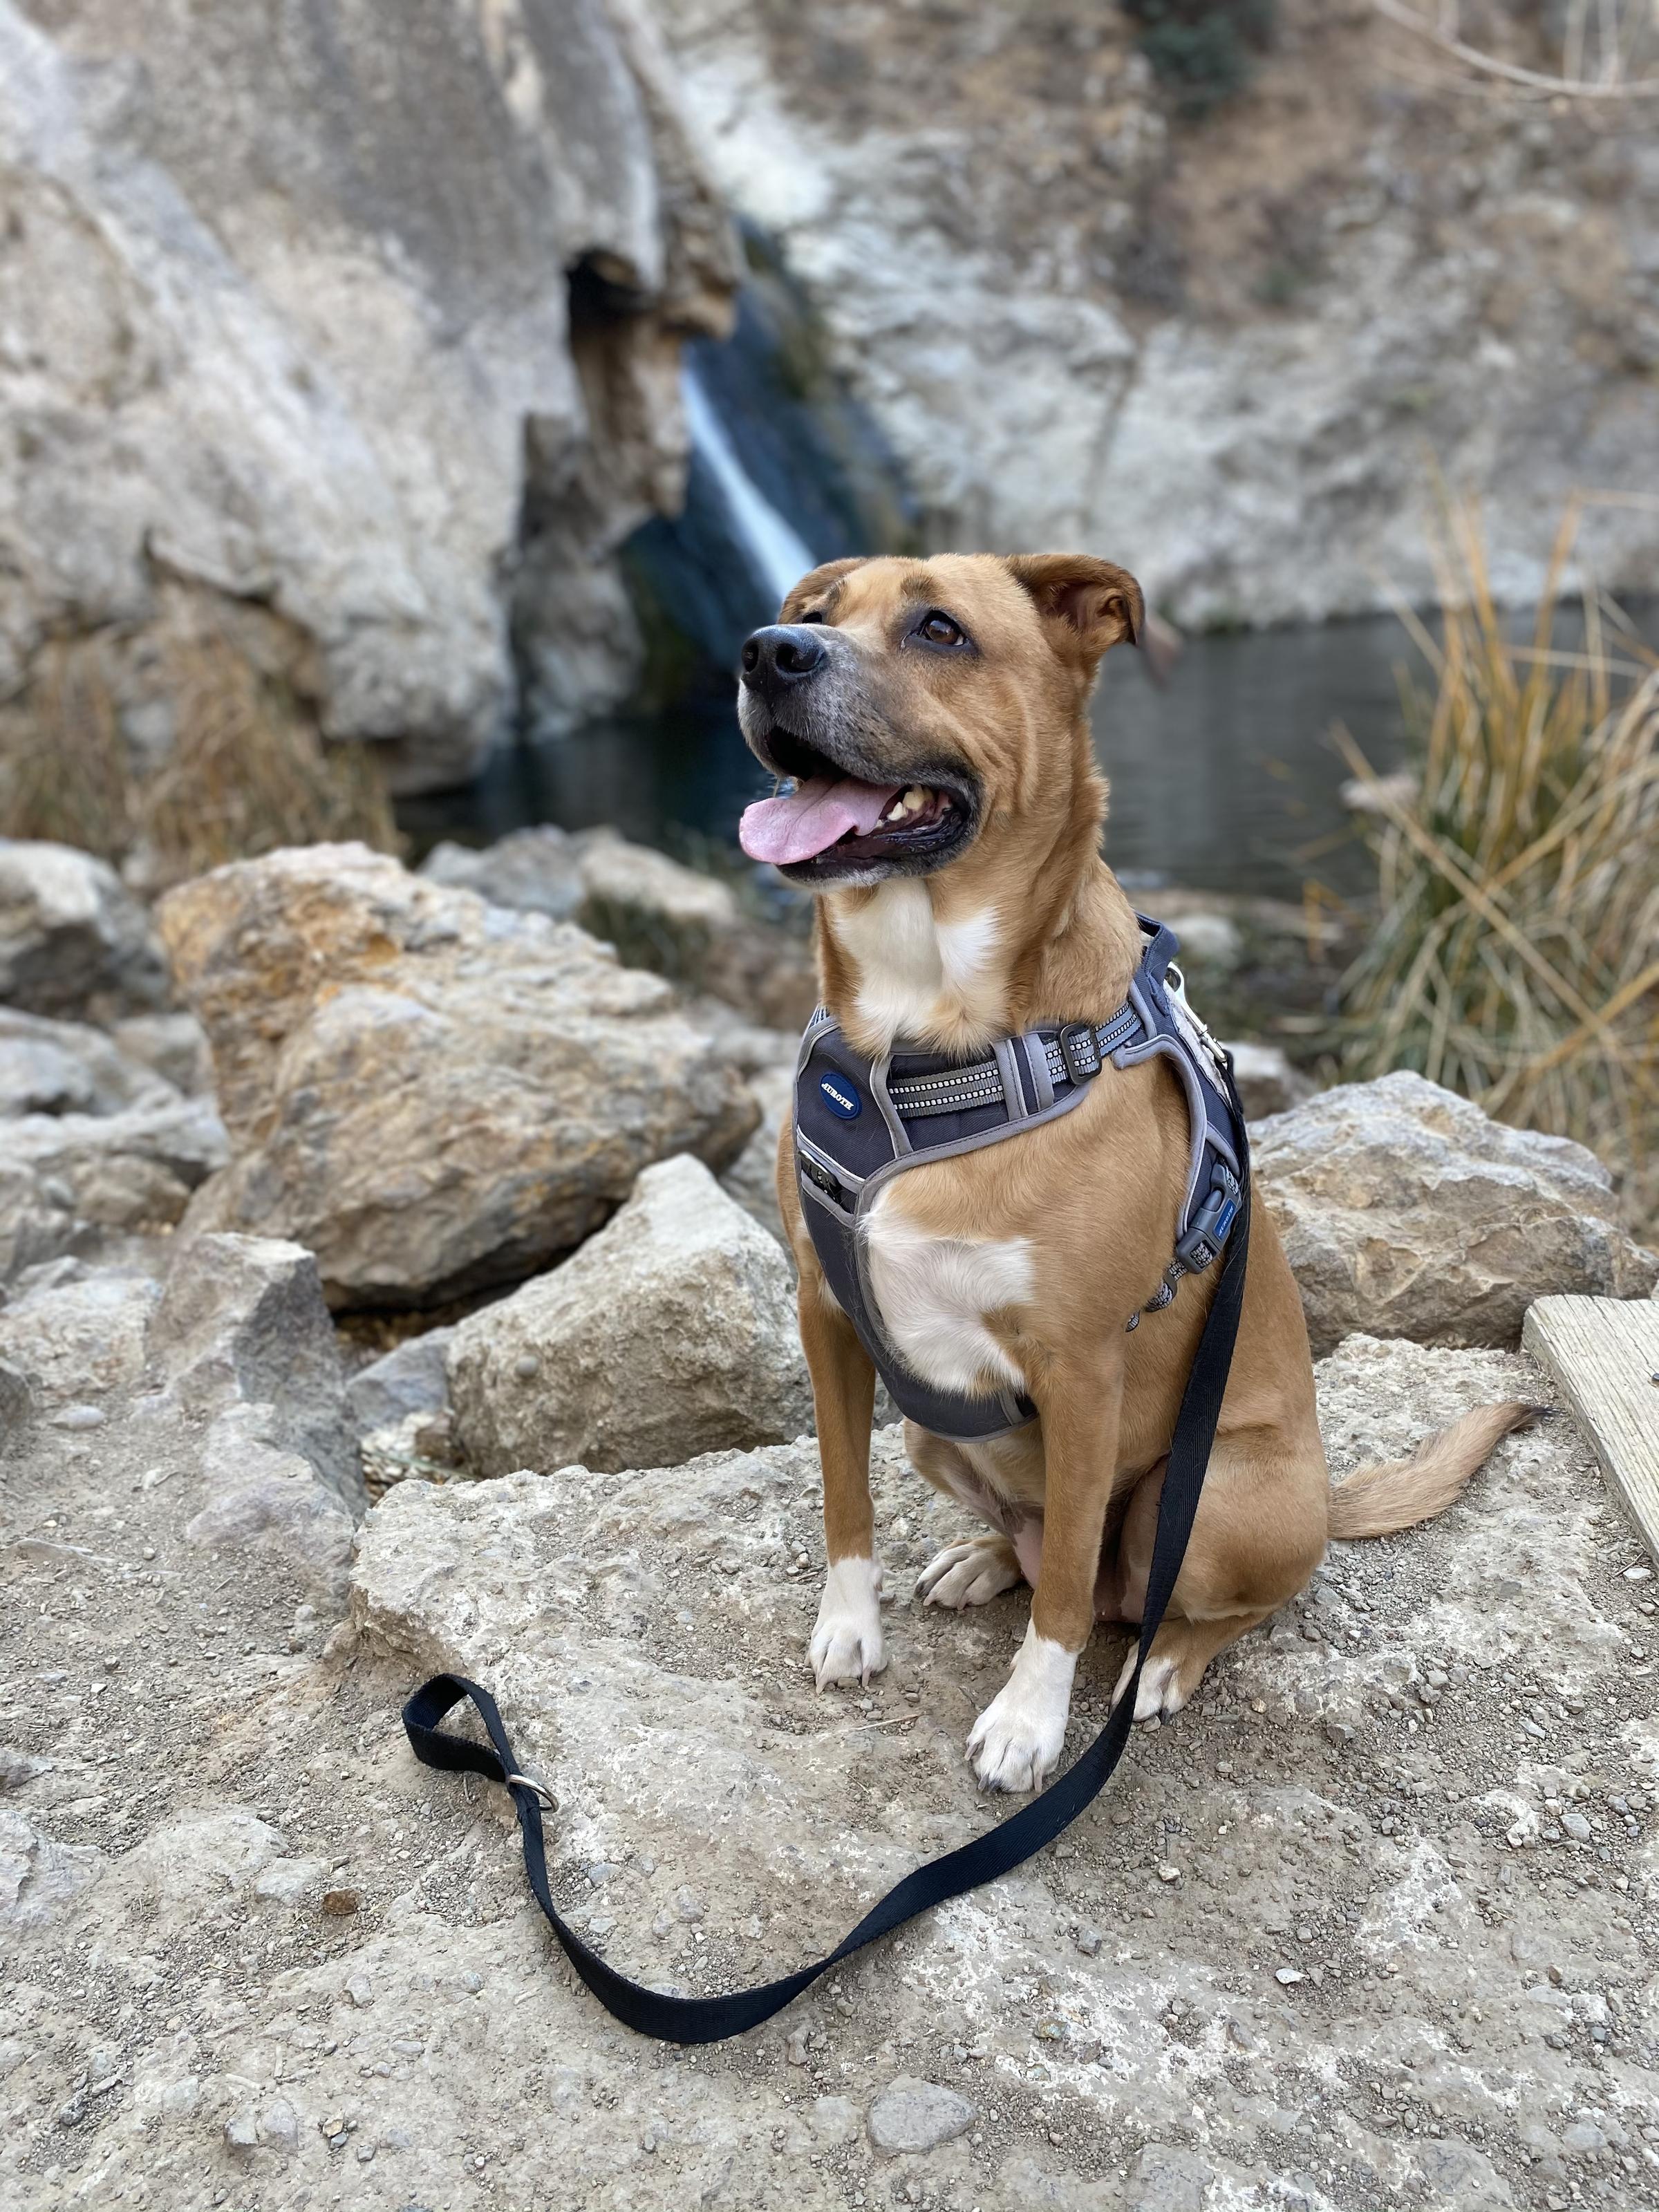 Paradise Falls – Hiking Girl with Dog